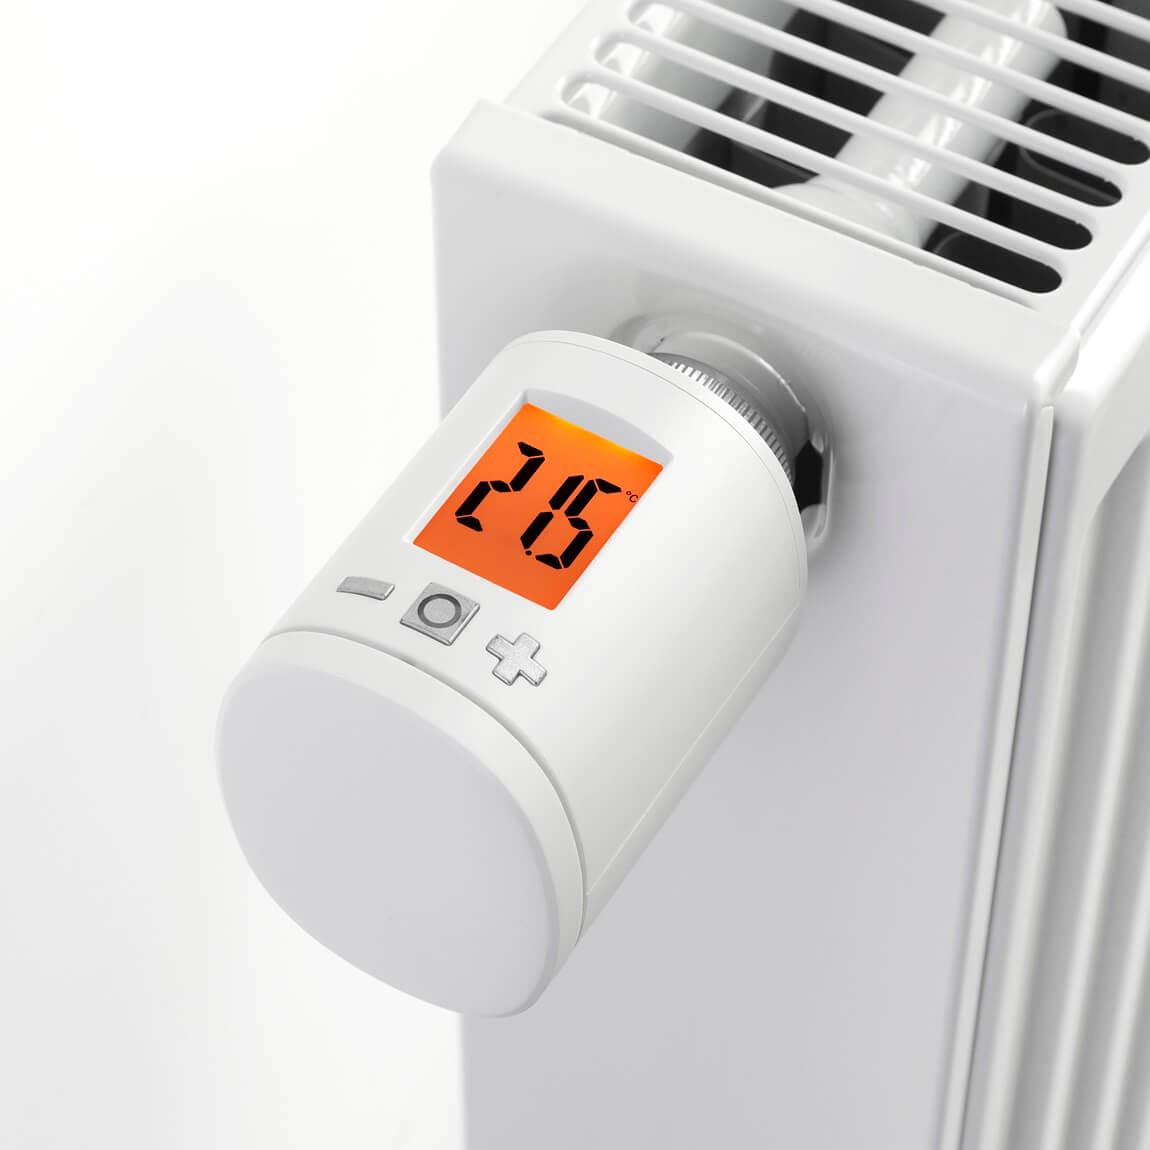 HOMEPILOT Heizkörper-Thermostat smart - Weiß